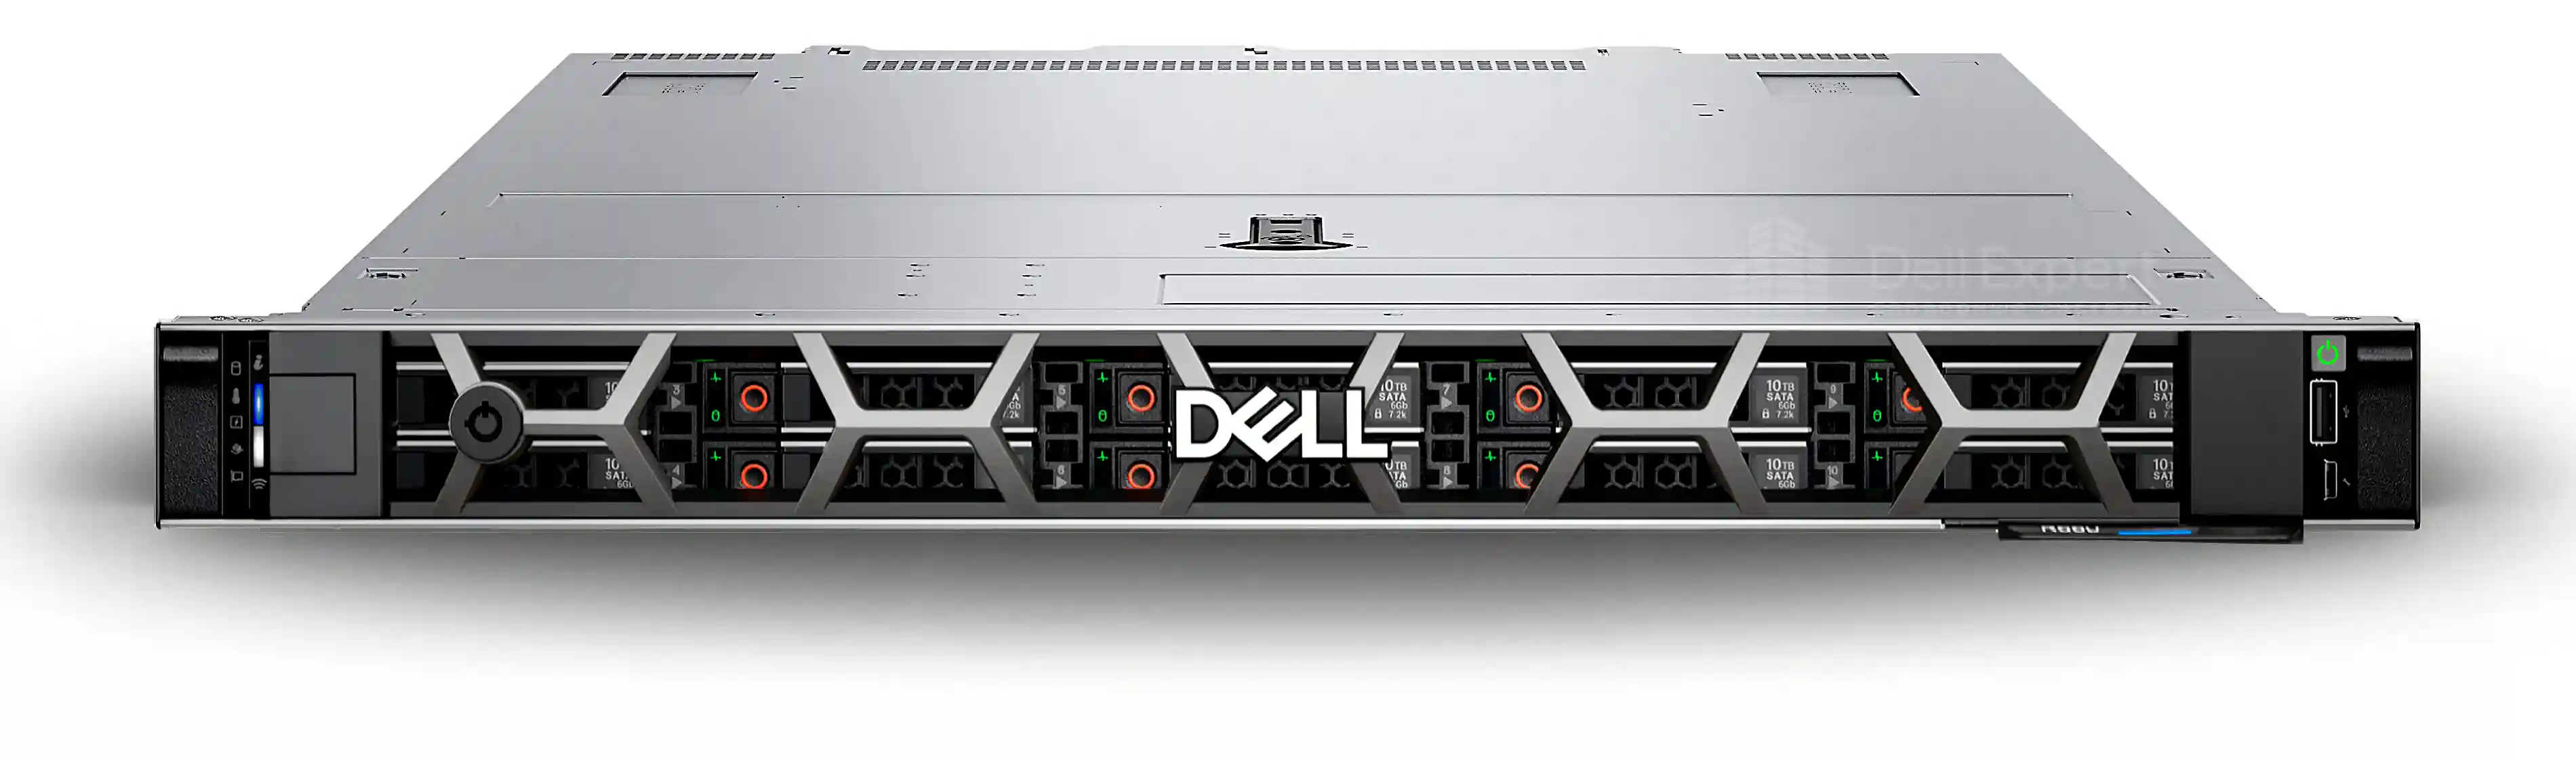 Dell PowerEdge r660xs